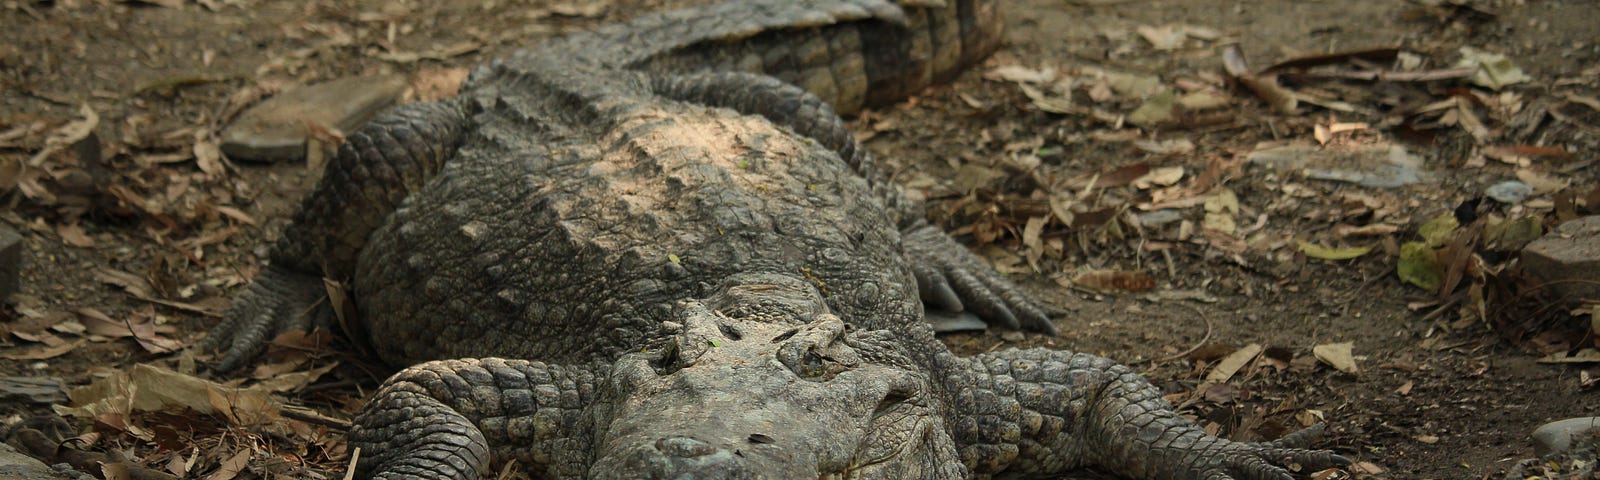 Close up shot of a crocodile.